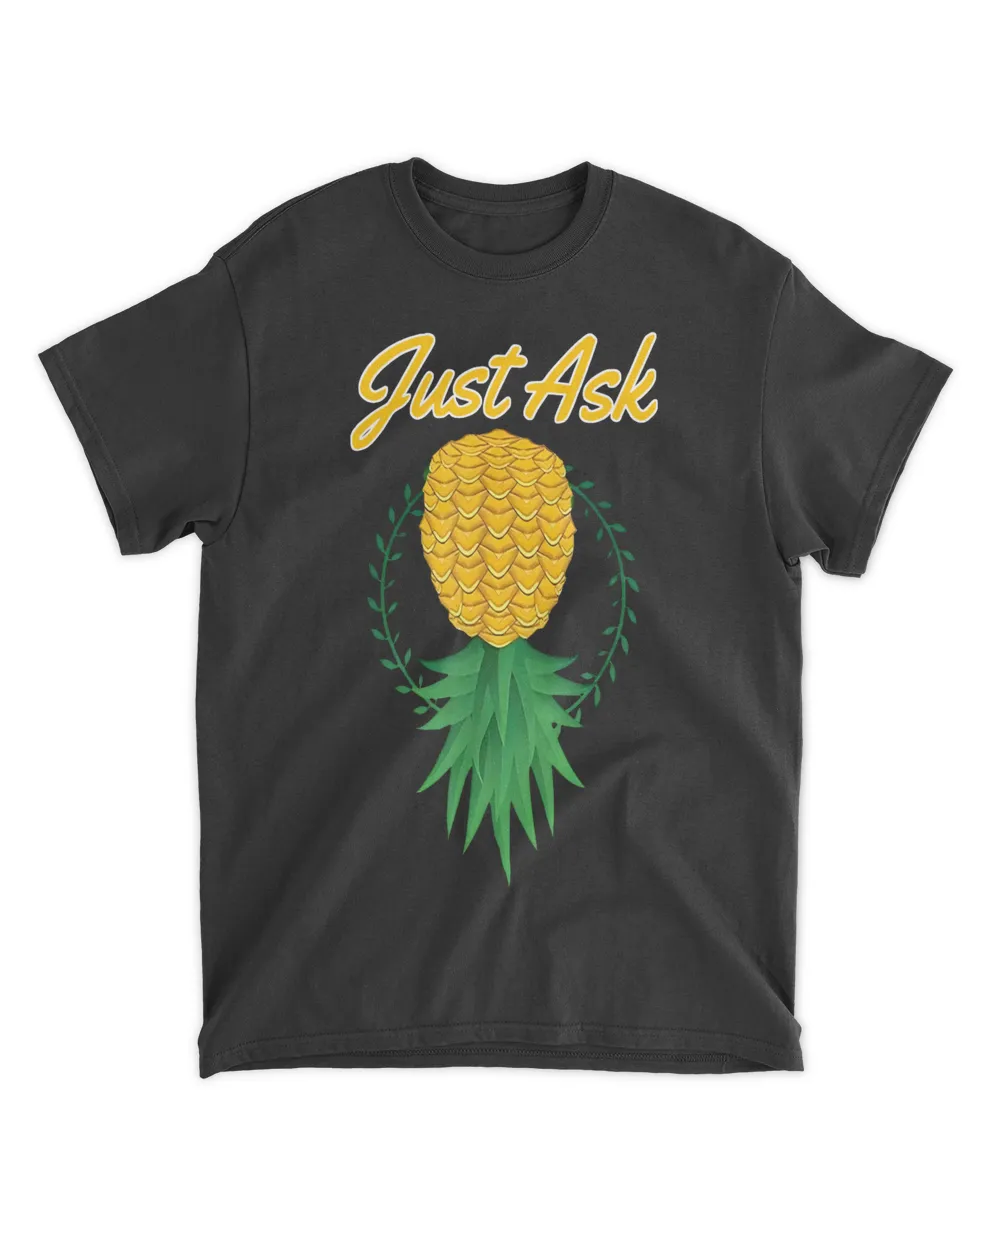 Just Ask Pineapple shirt